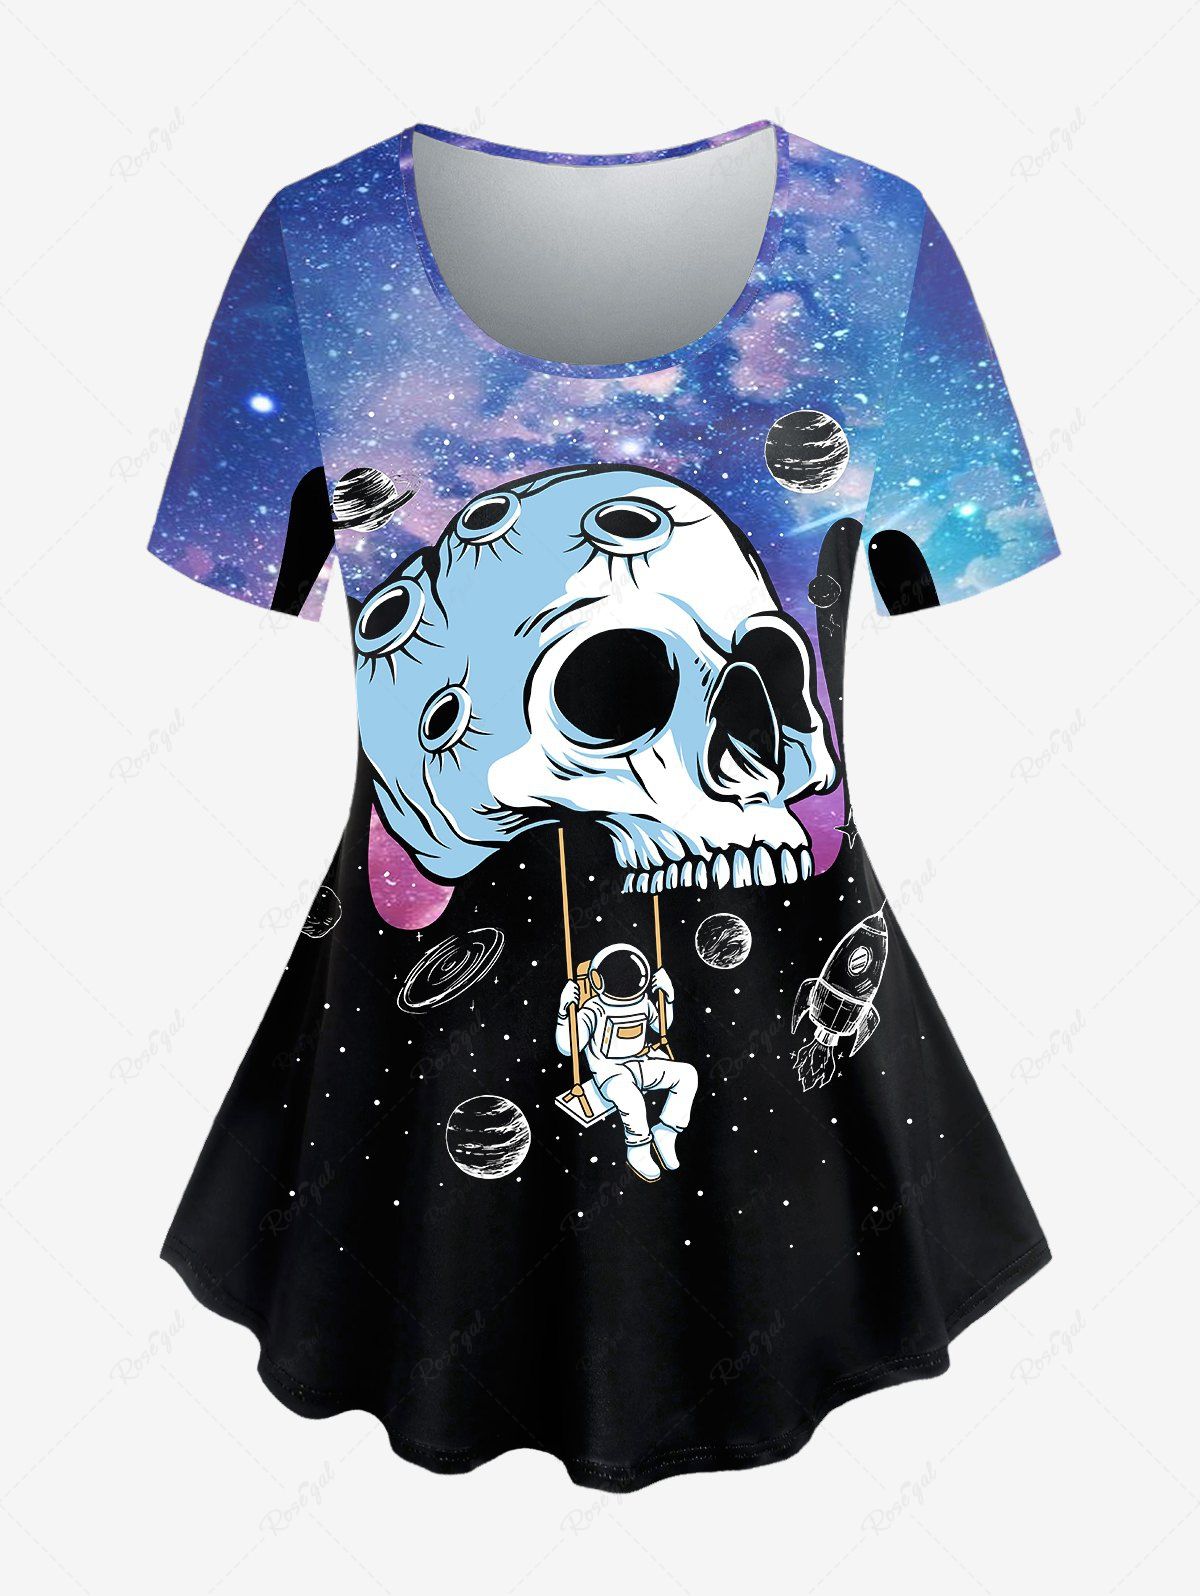 Chic Gothic Short Sleeve Skull Galaxy Astronaut Print T Shirt  